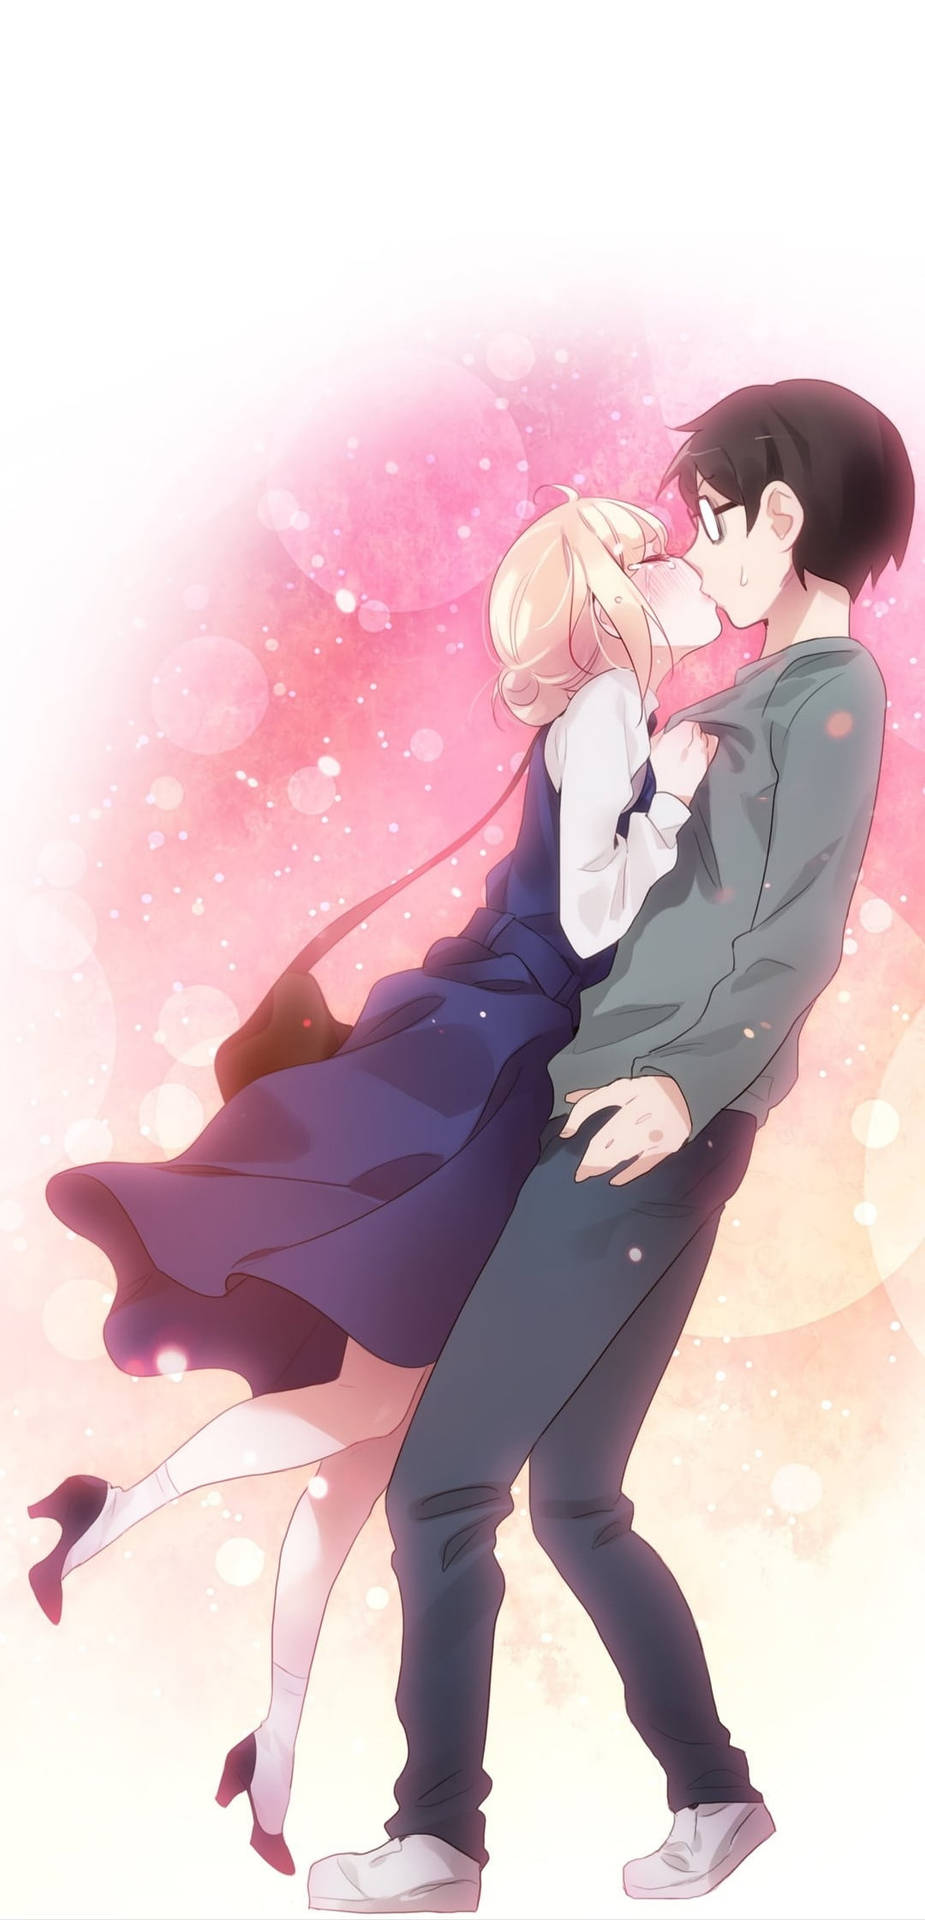 Kissing Aesthetic Anime Couple Background